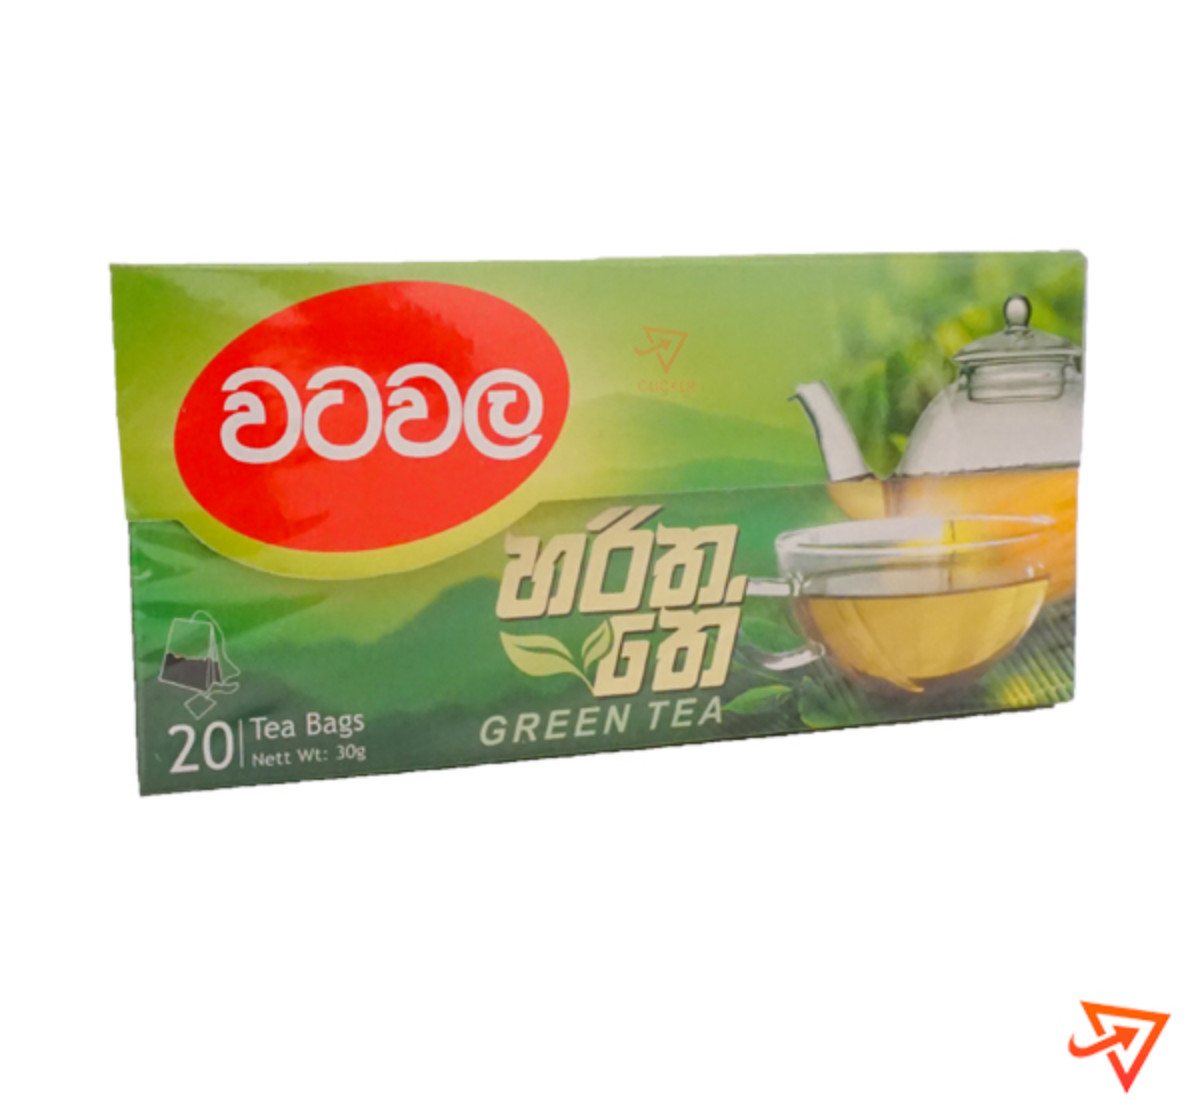 Clicker product 30g WATAWALA green tea(20 tea bags) 902